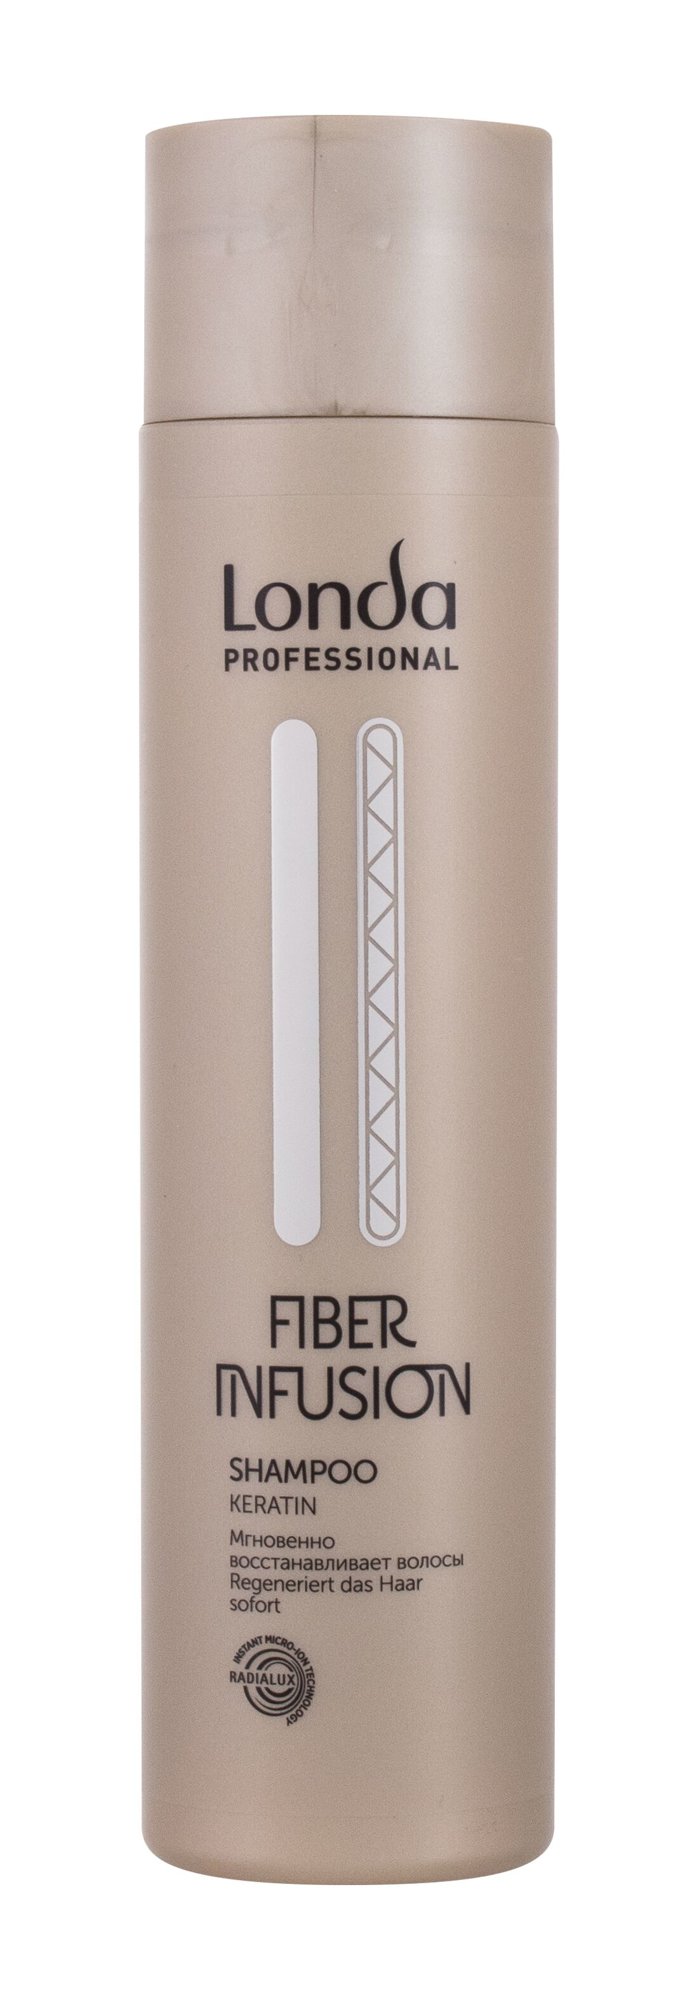 Londa Professional Fiber Infusion 250ml šampūnas